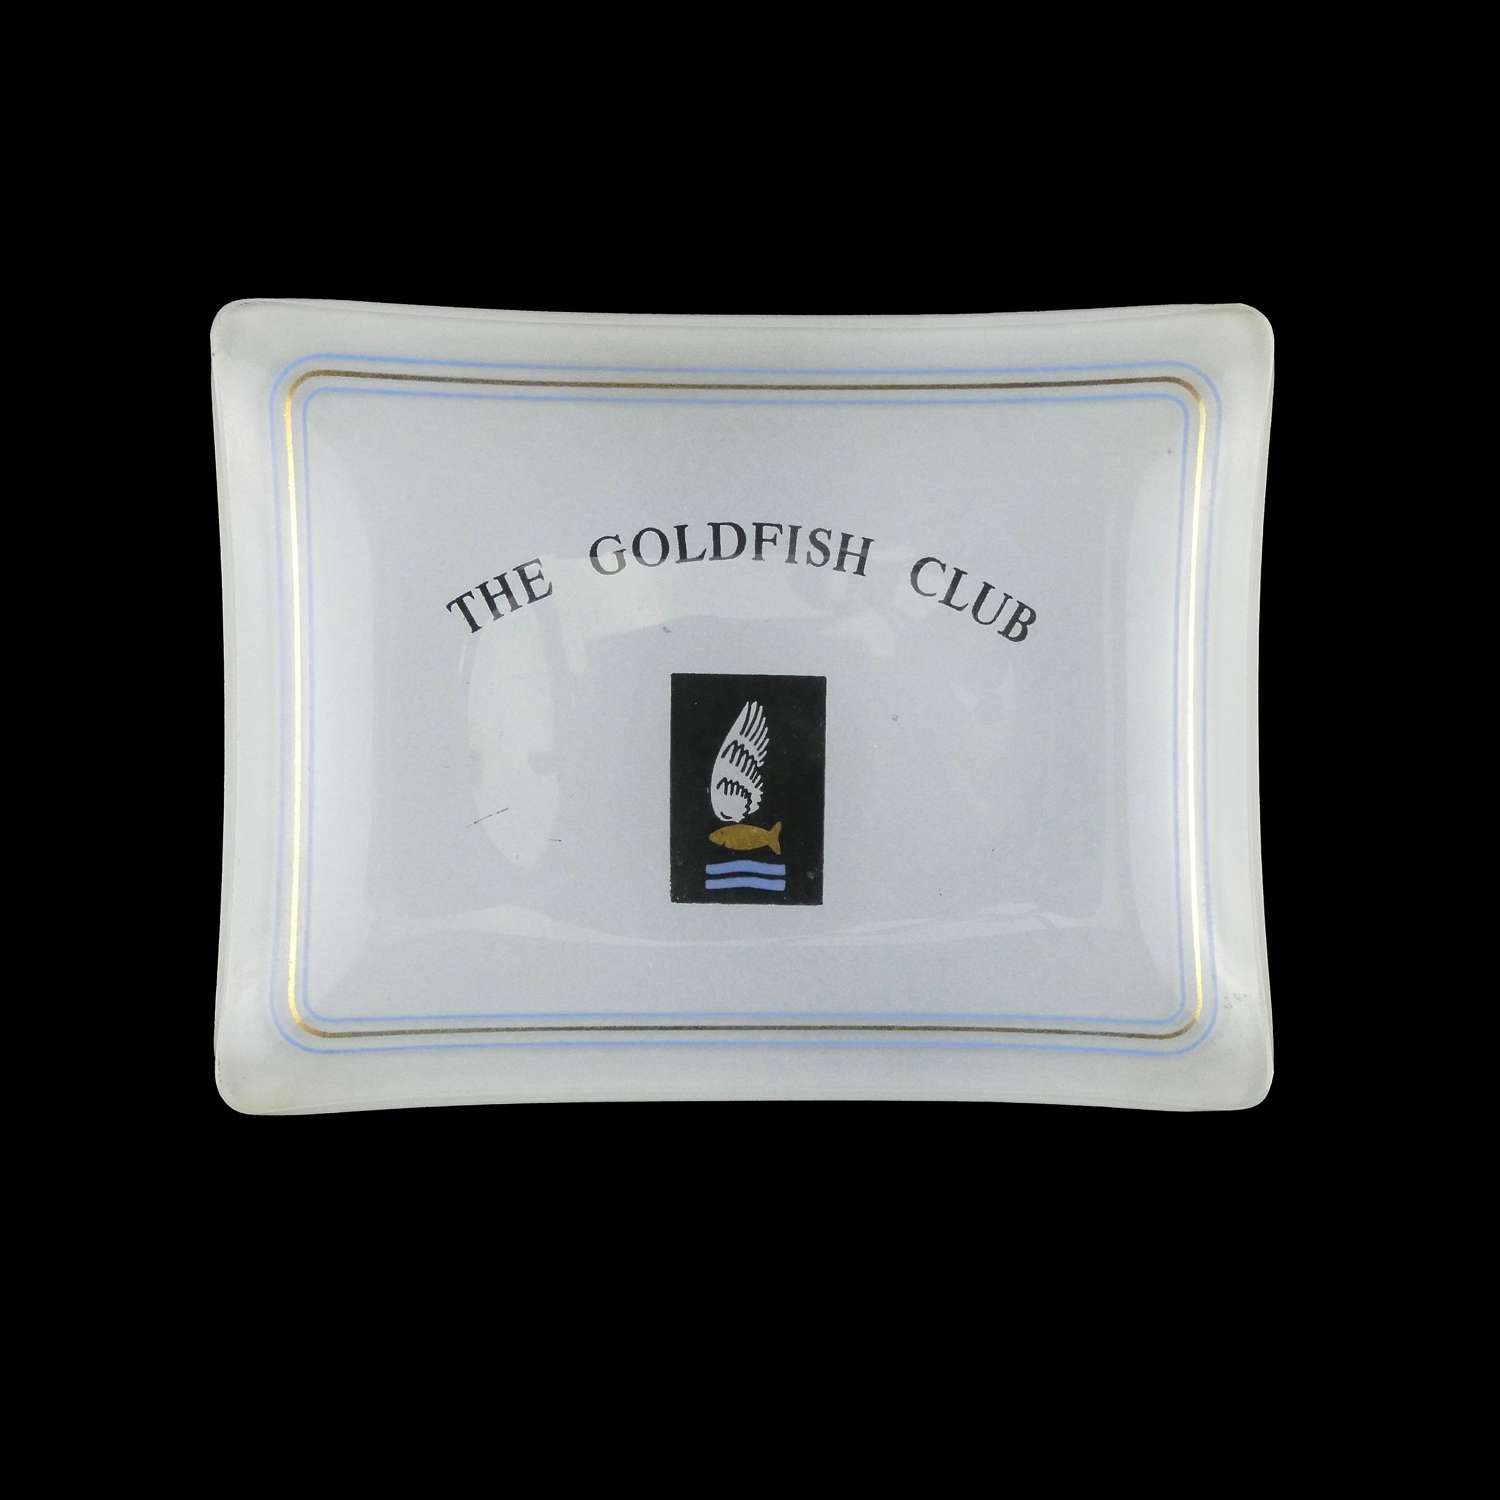 RAF Goldfish club ashtray - history